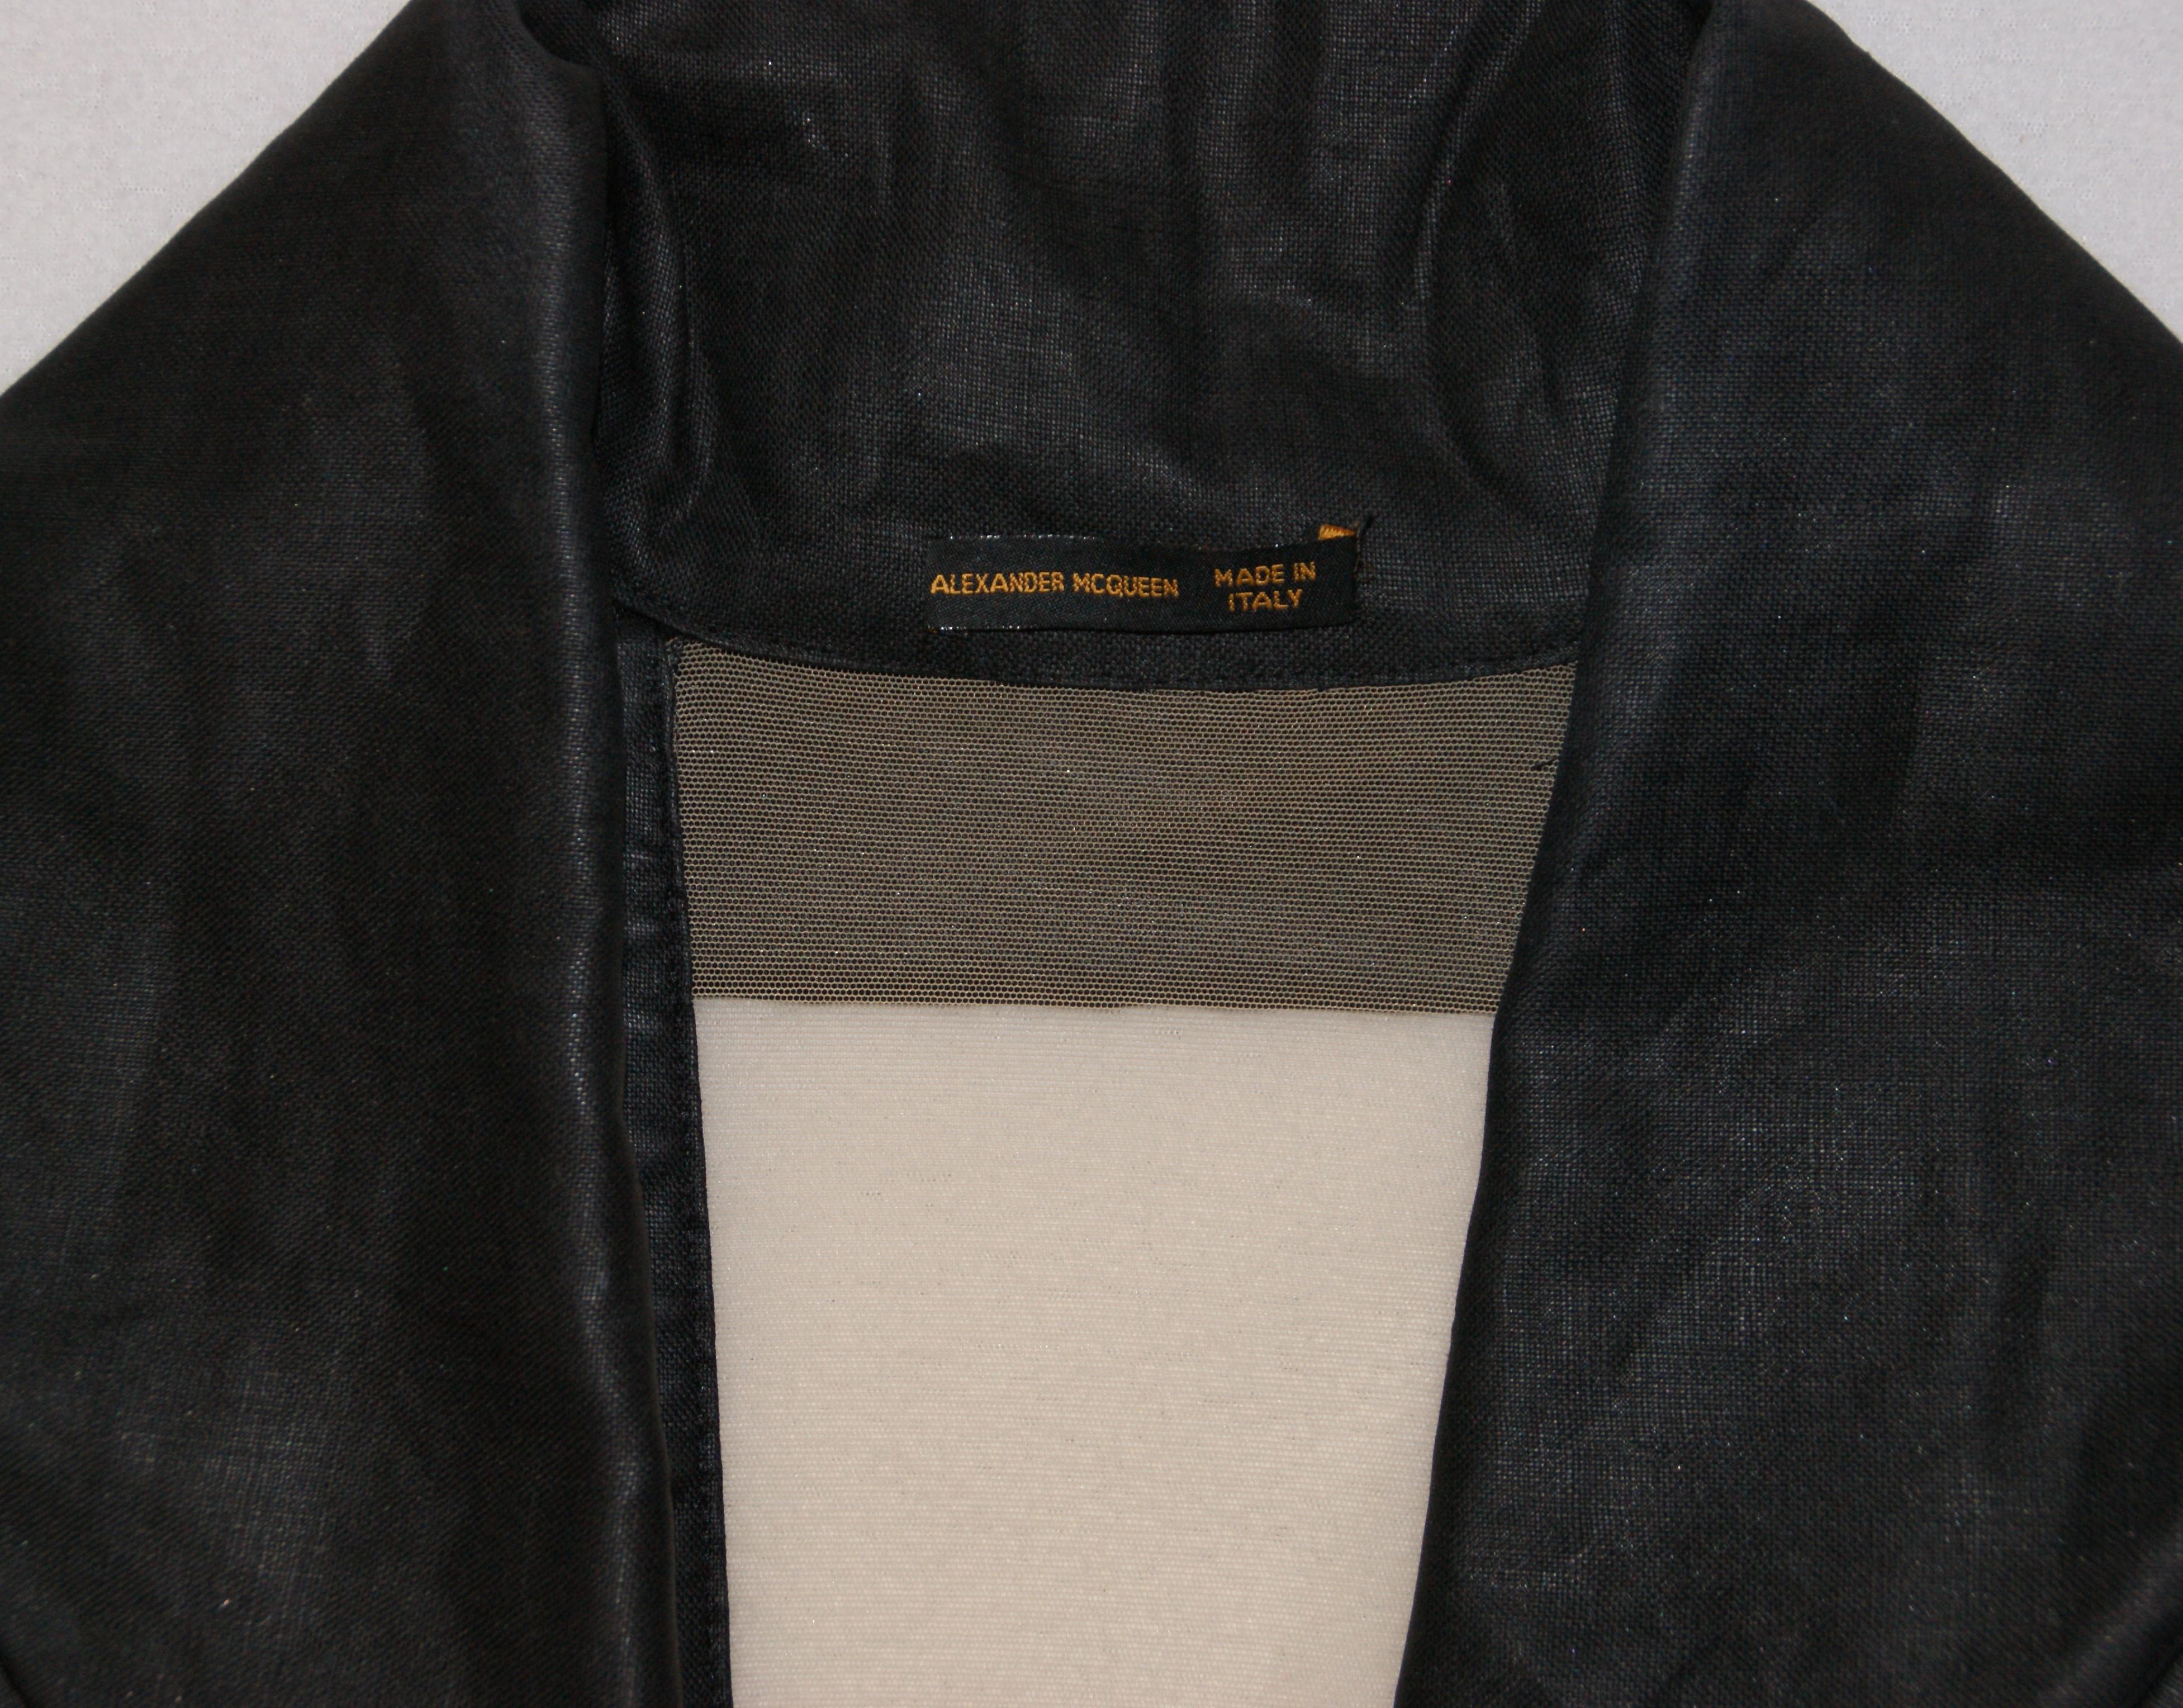 Alexander McQueen Museum Savage Beauty Untitled S/S 1999 Resin Black Coat Dress 5